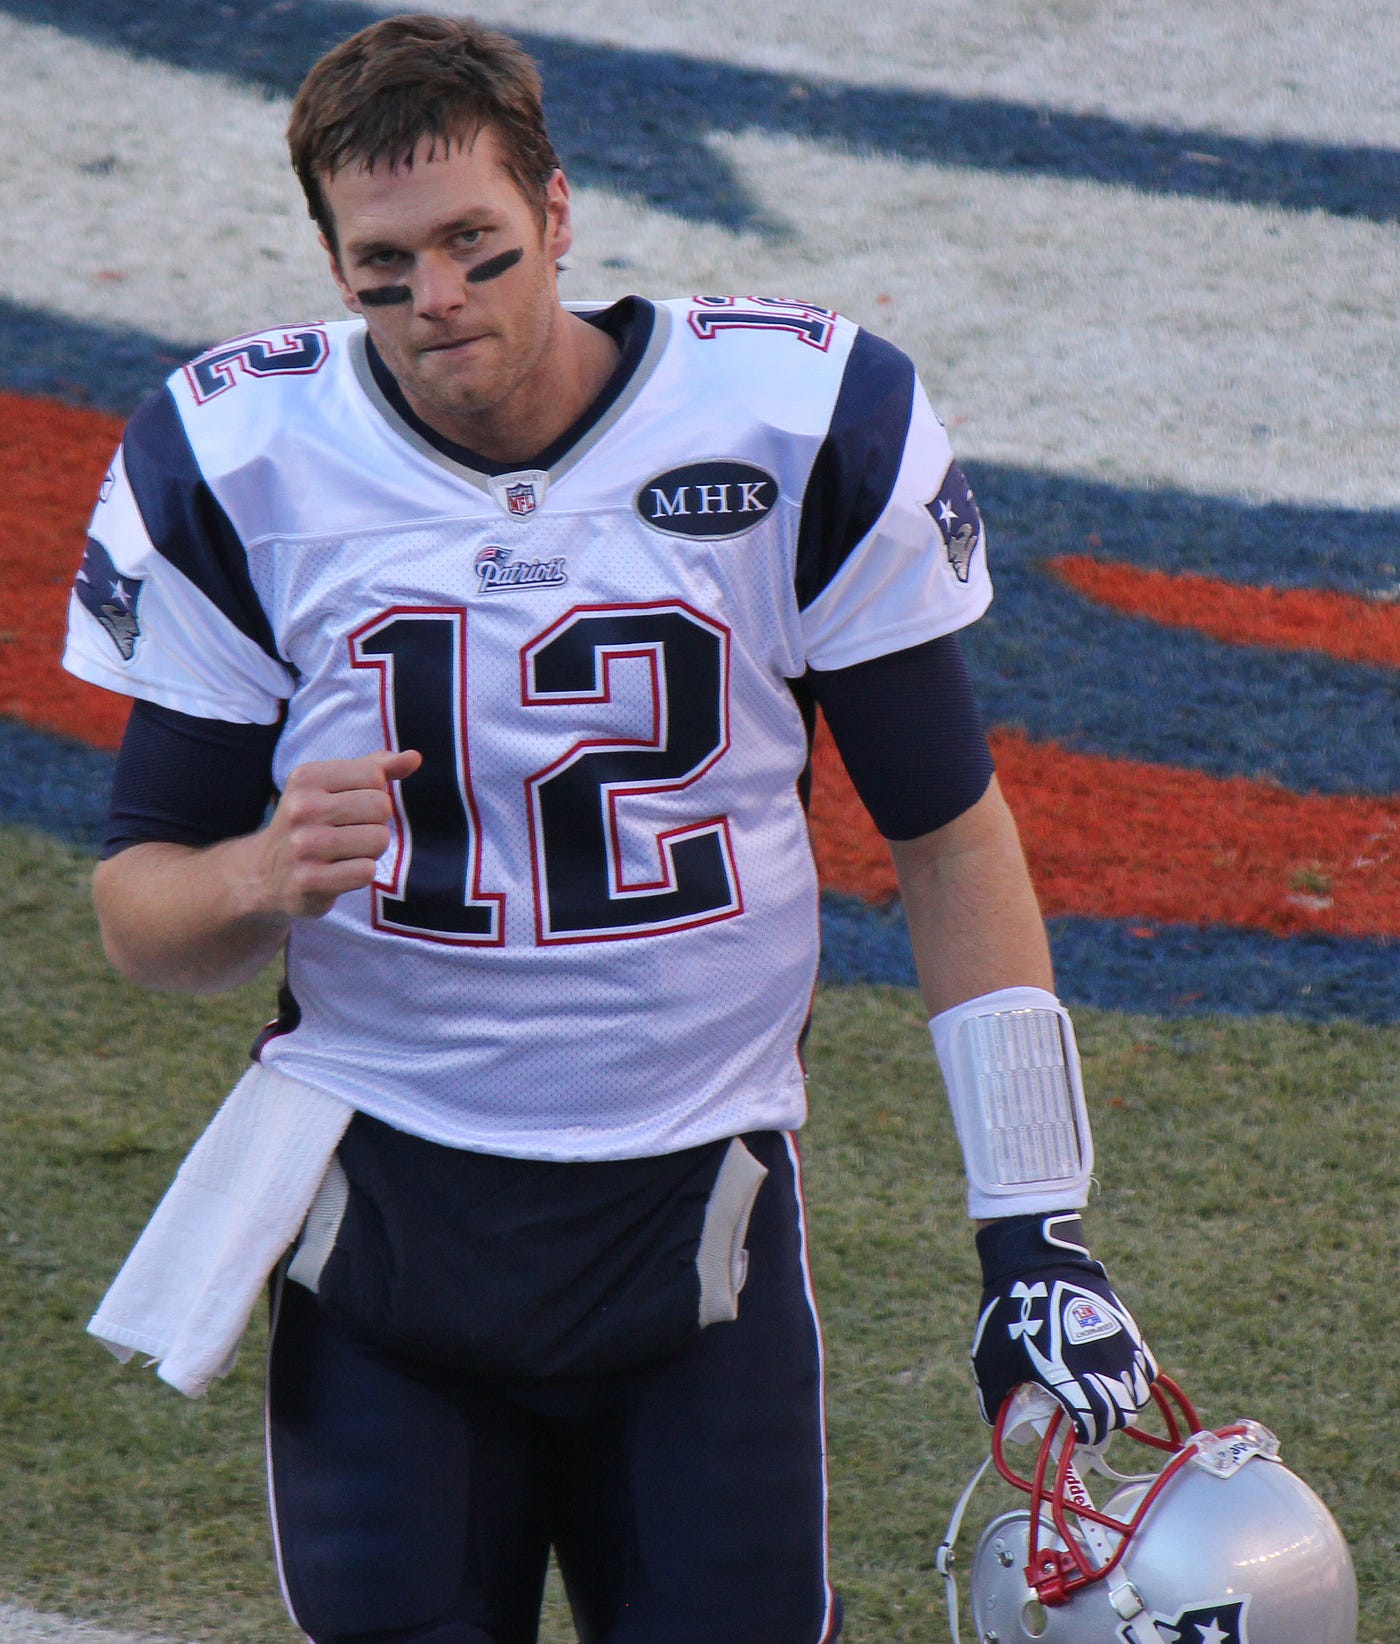 Tom Brady in 2001 vs. Tom Brady now : r/pics